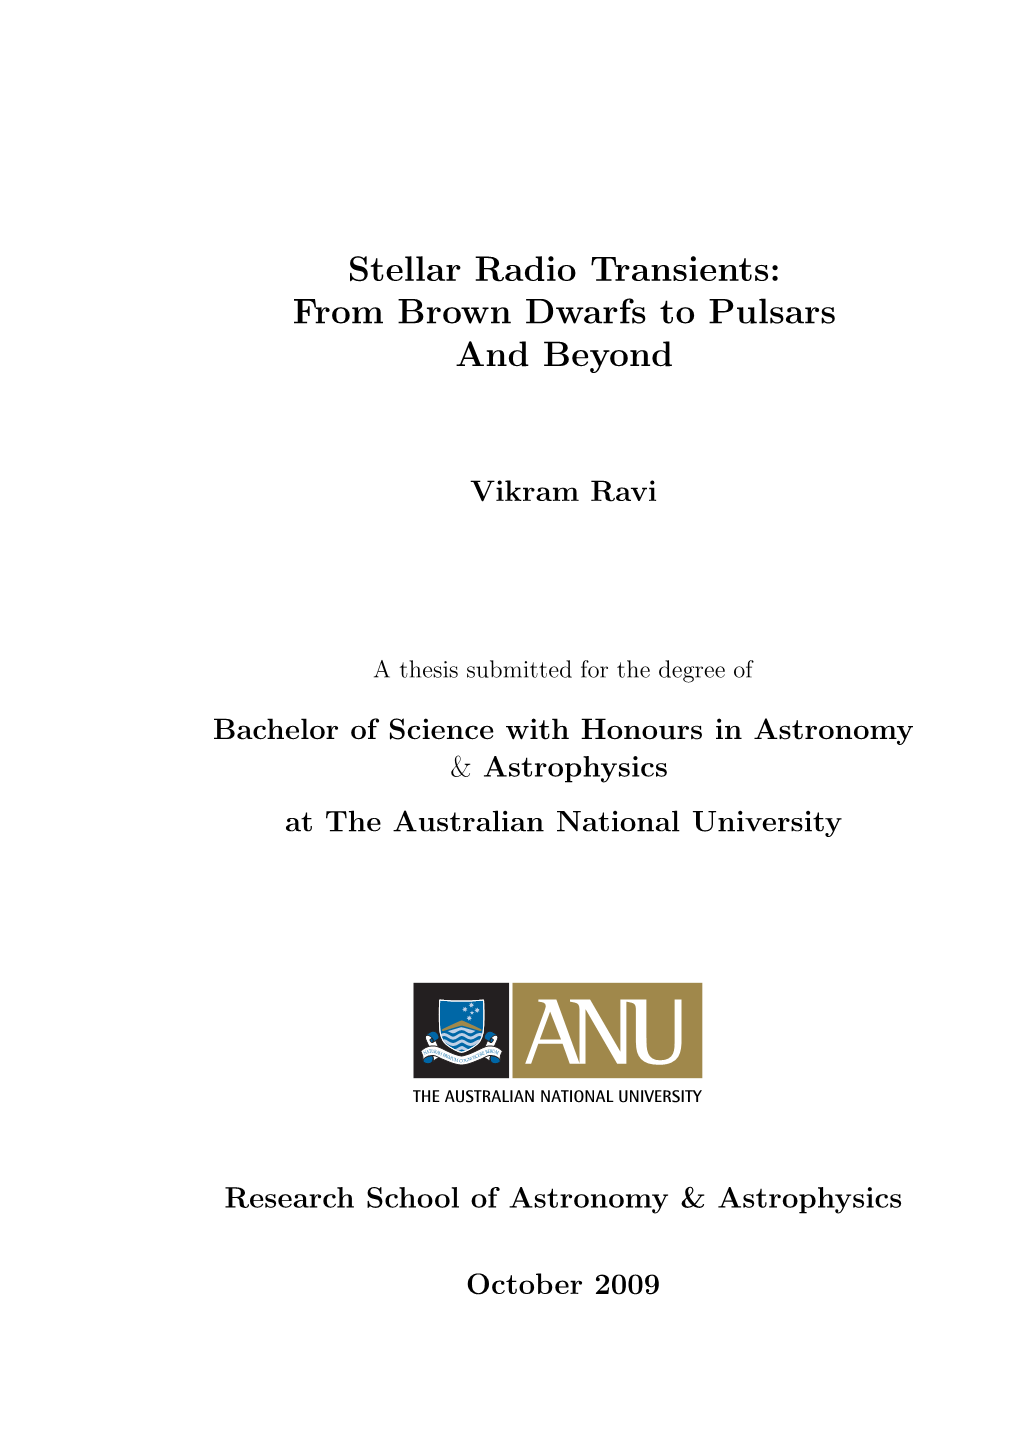 Stellar Radio Transients: from Brown Dwarfs to Pulsars and Beyond